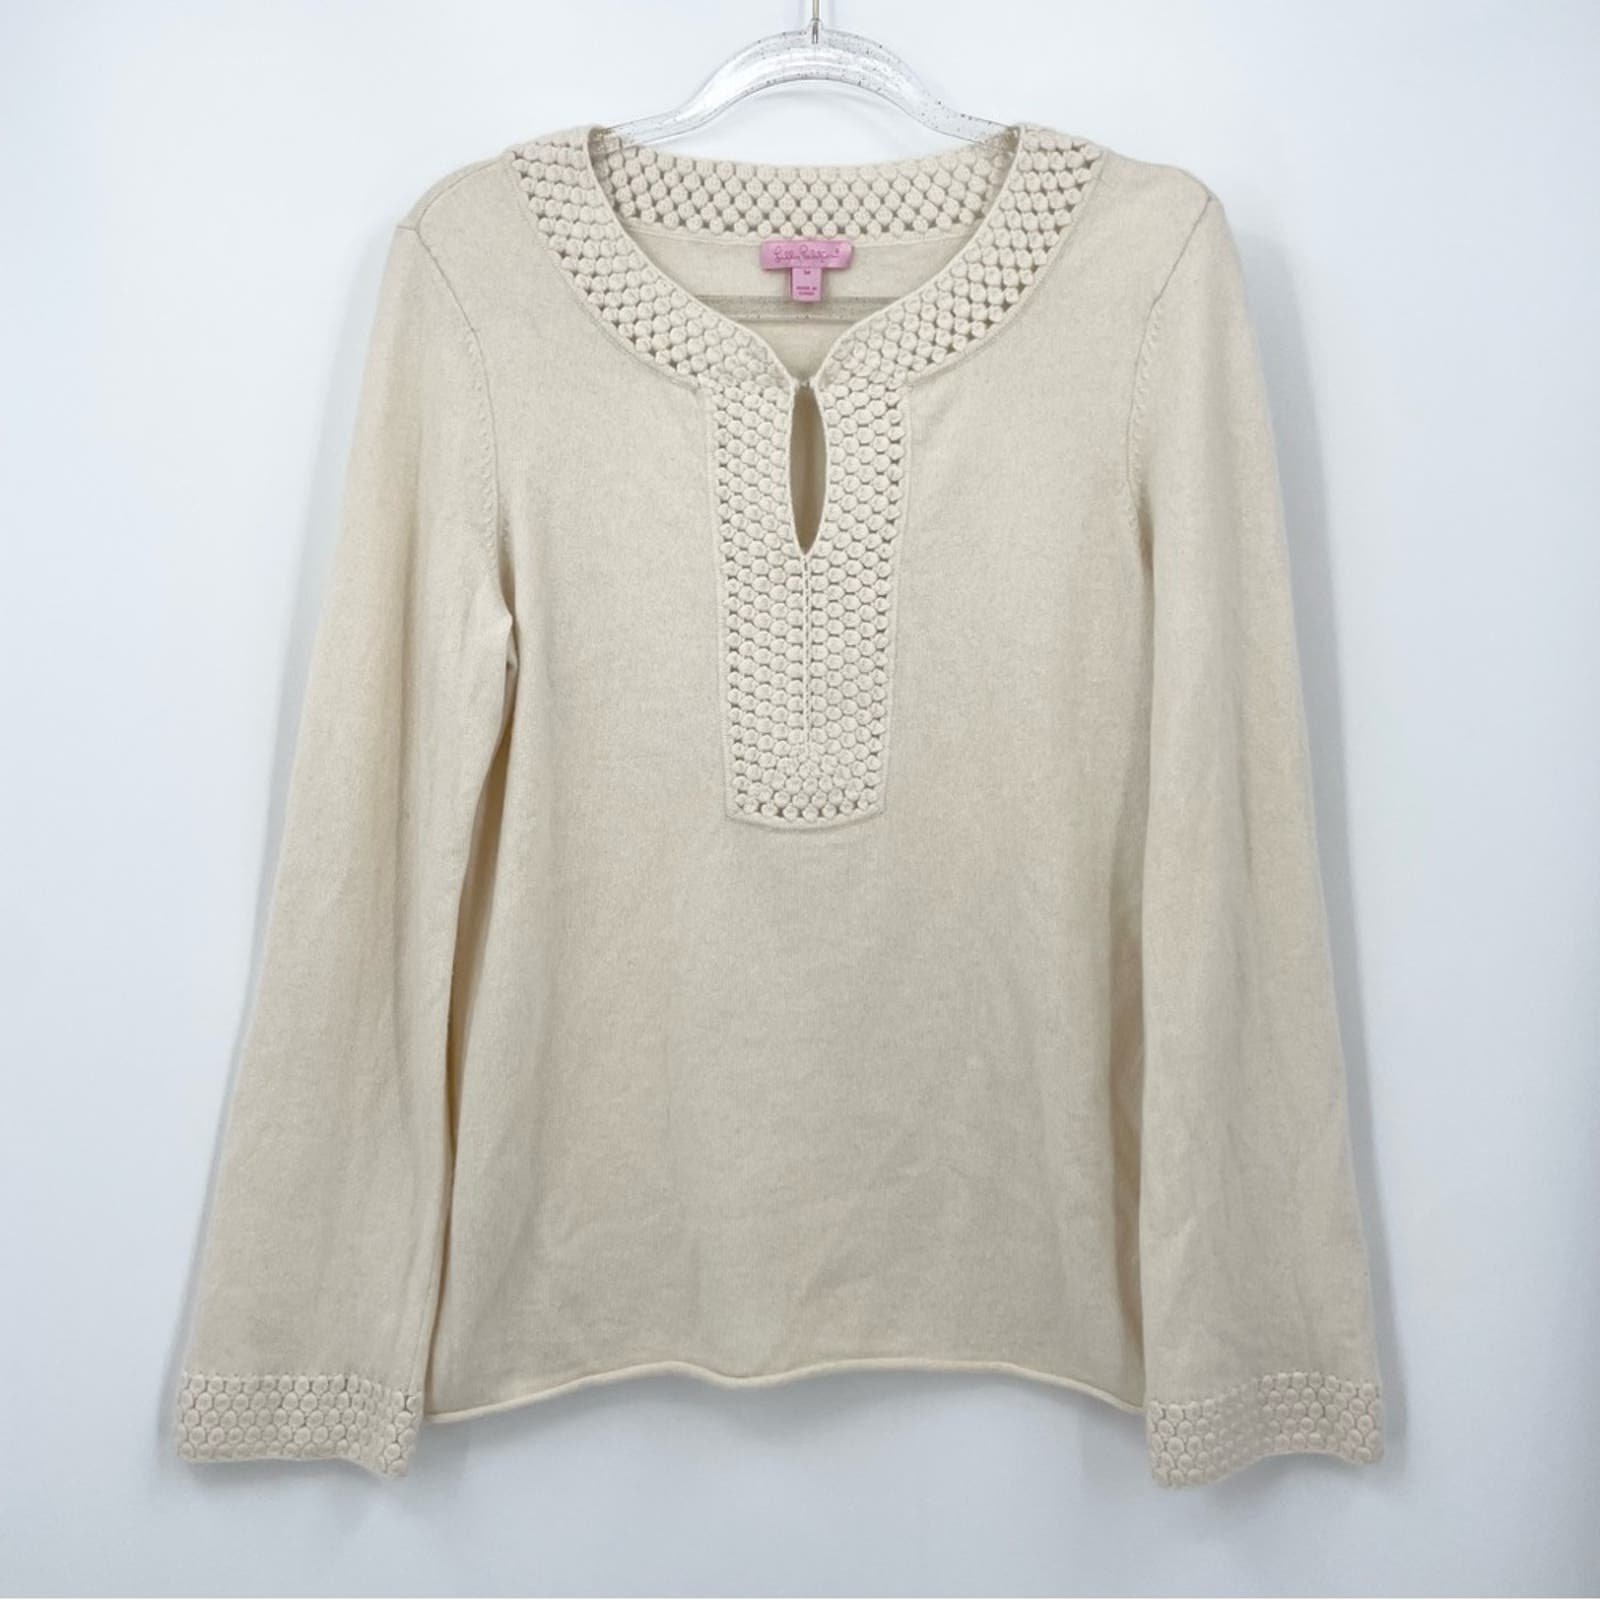 Amazing Lilly Pulitzer Cashmere Sweater Size Medium hSJsI3ofc just buy it